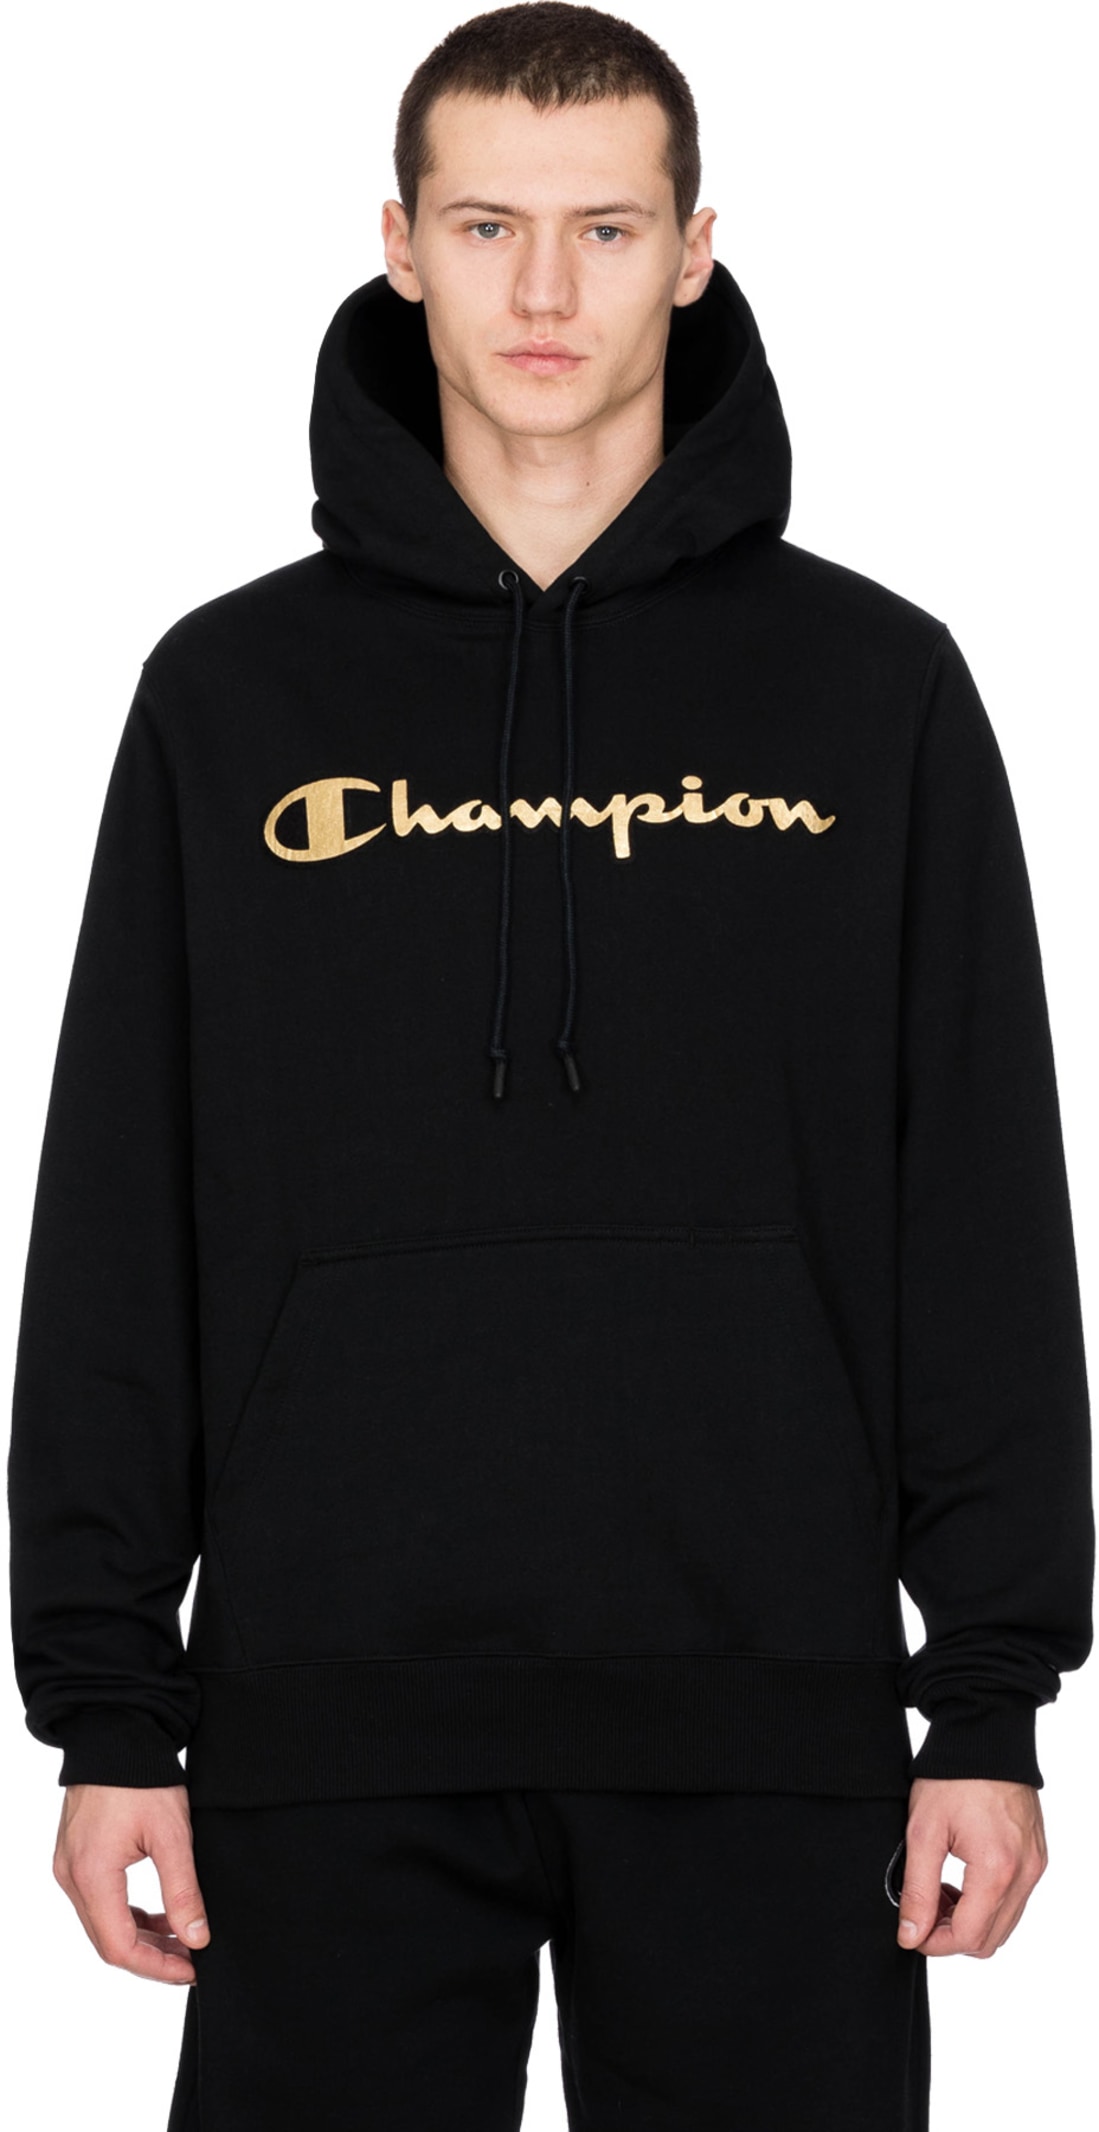 champion sweatshirt black and gold